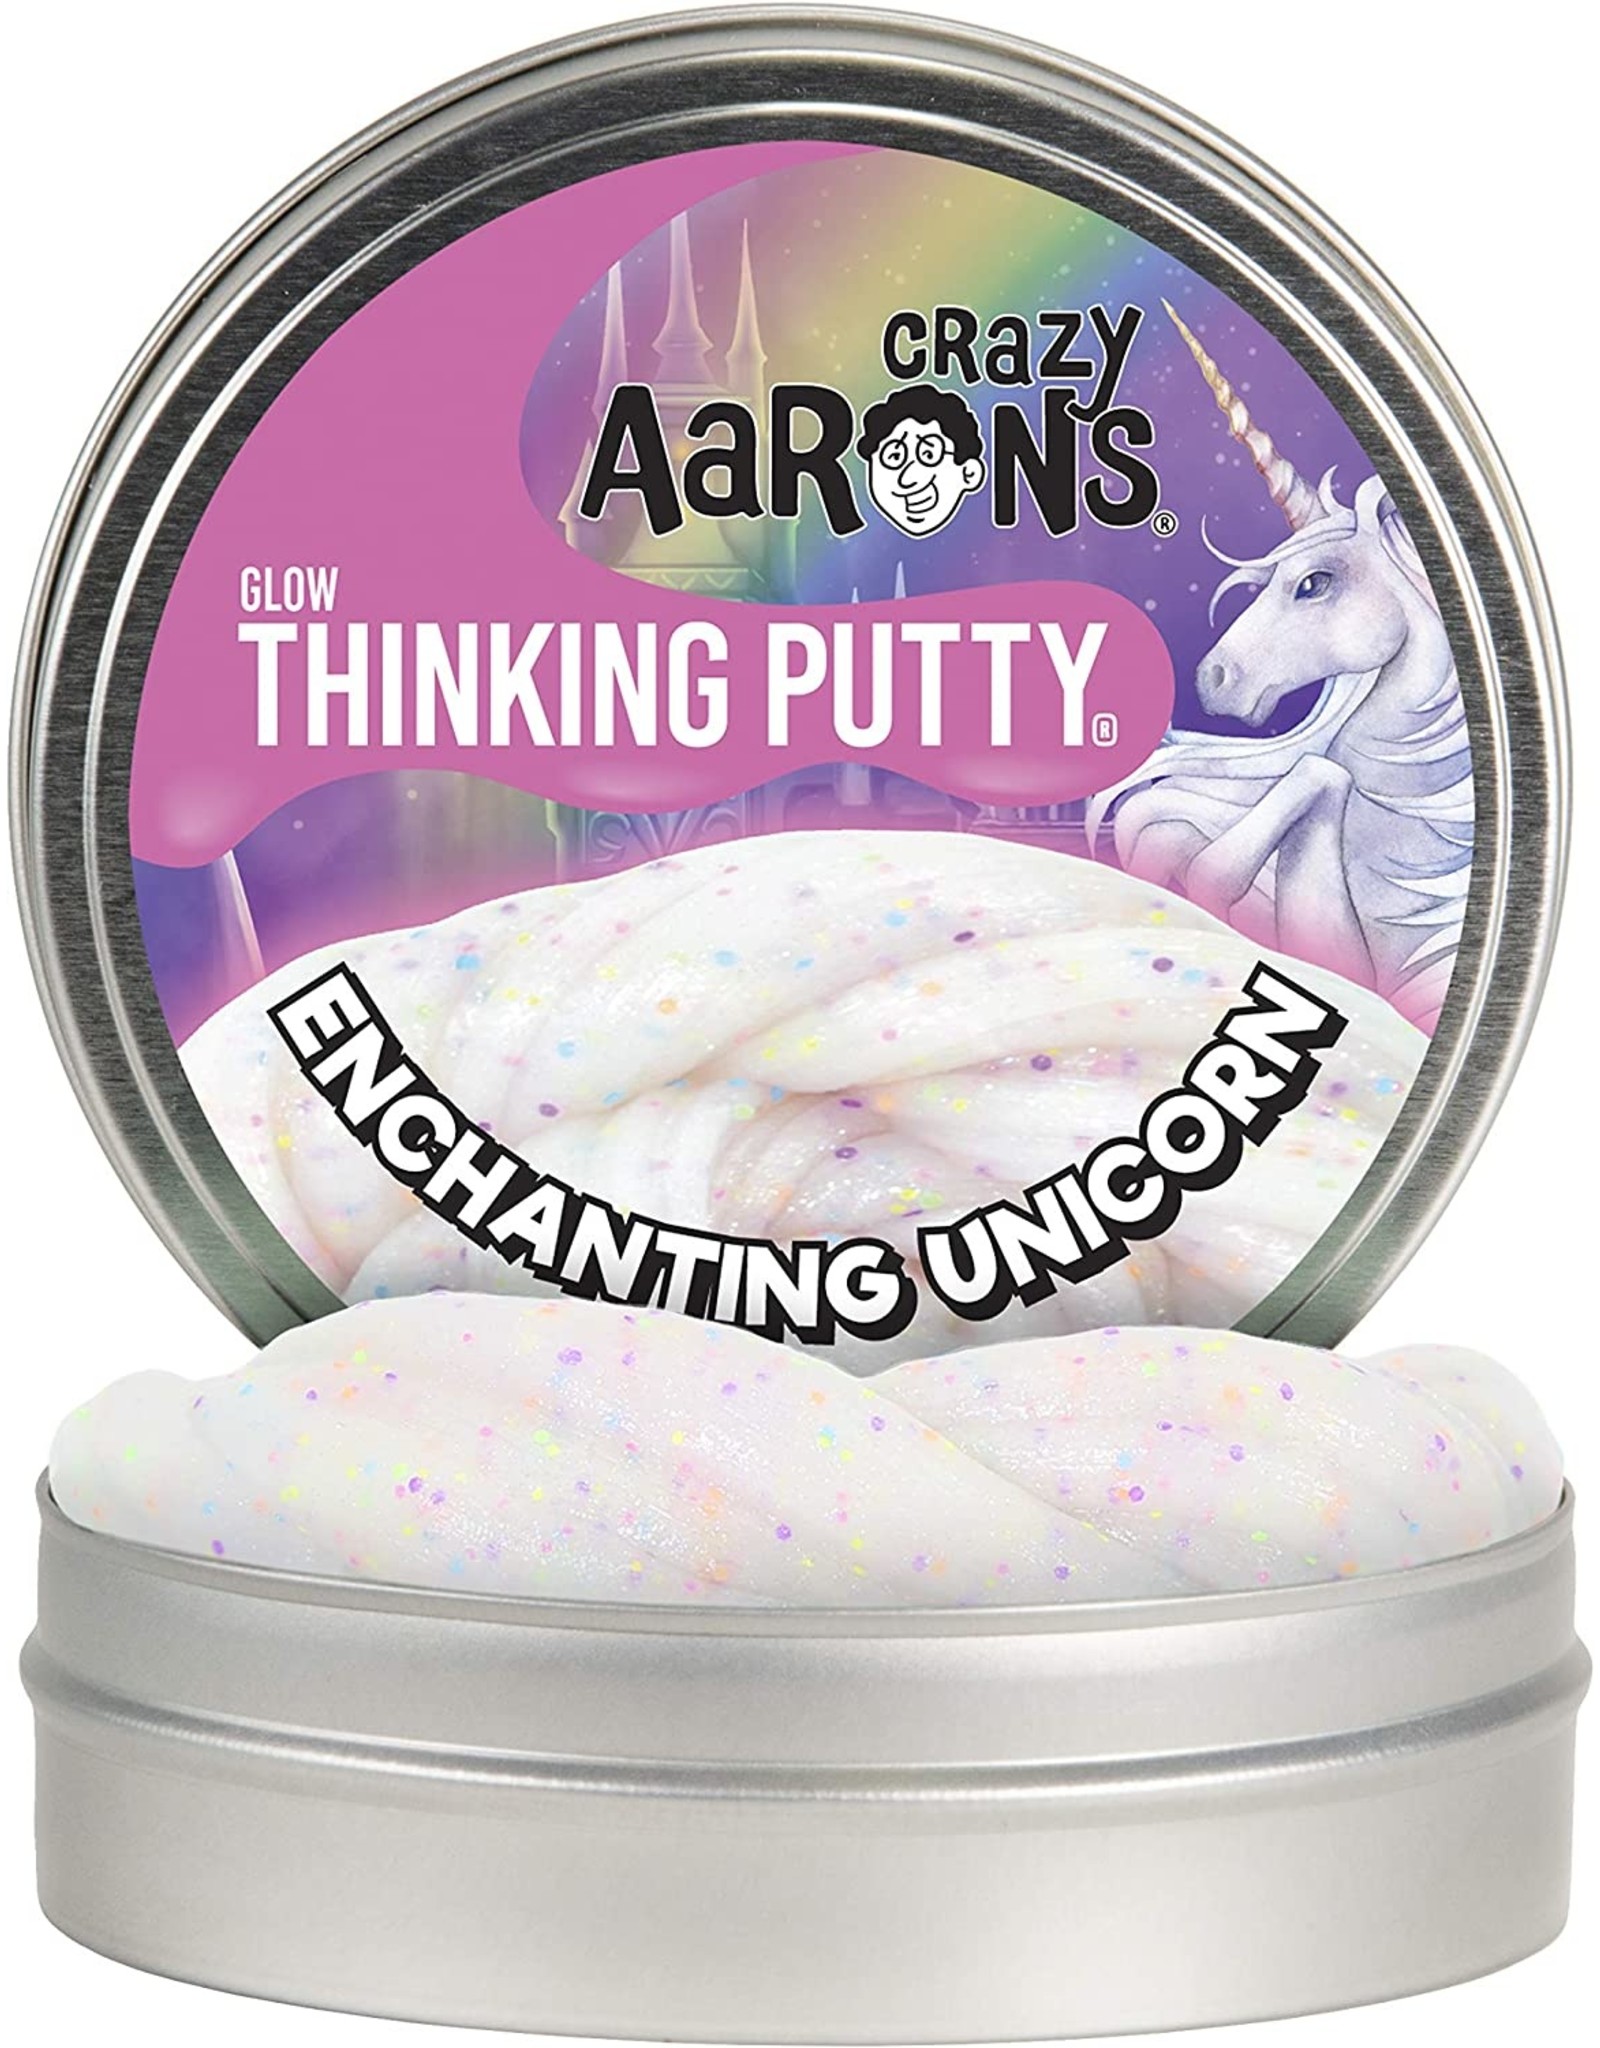 Crazy Aaron's Enchanting Unicorn Thinking Putty